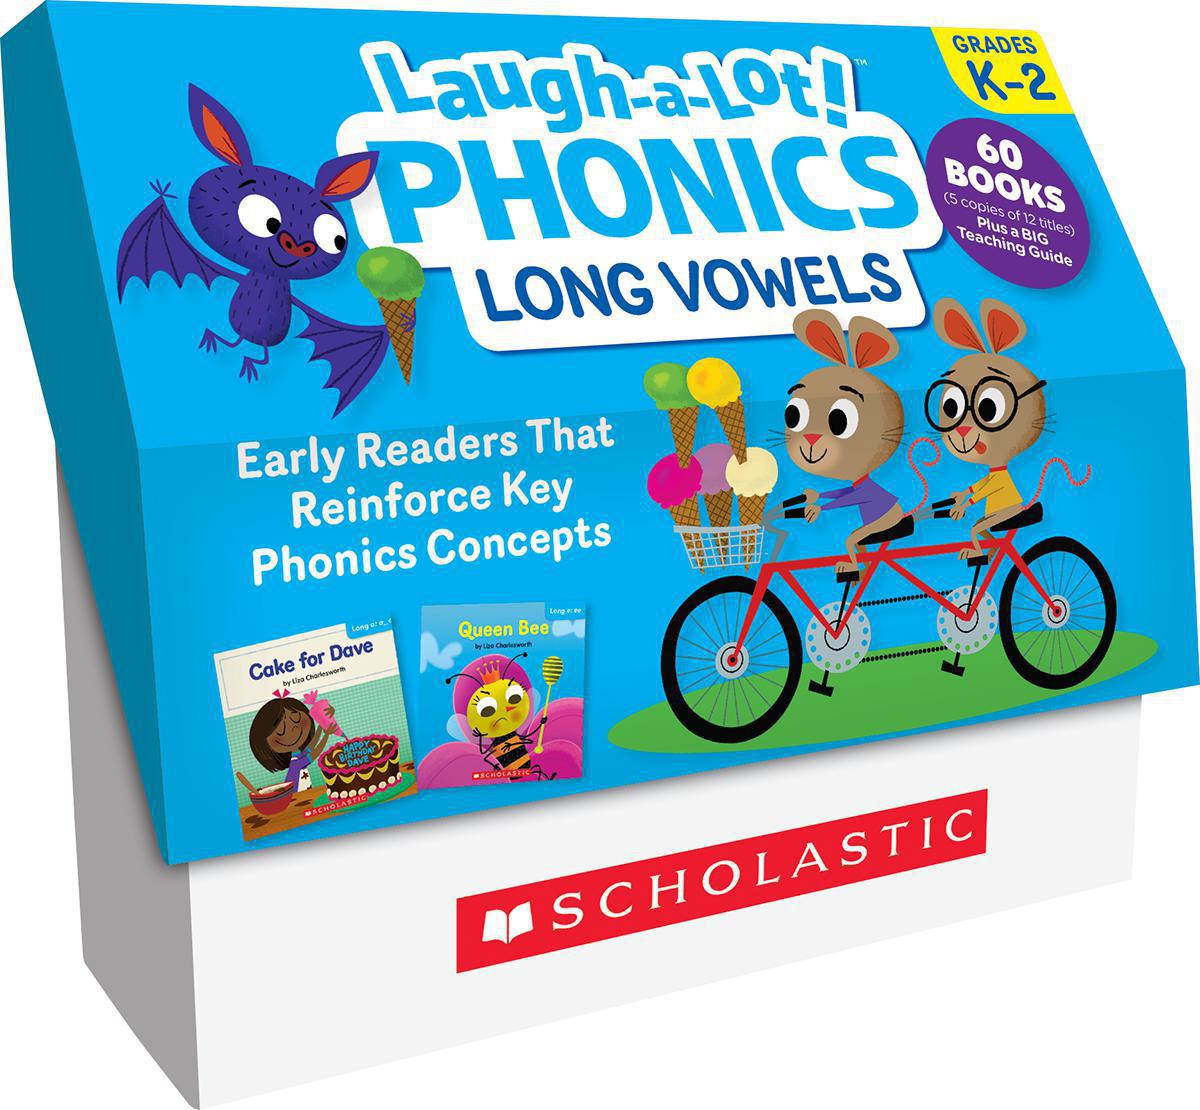  Laugh-a-Lot! Phonics!: Long Vowels Classroom Set 